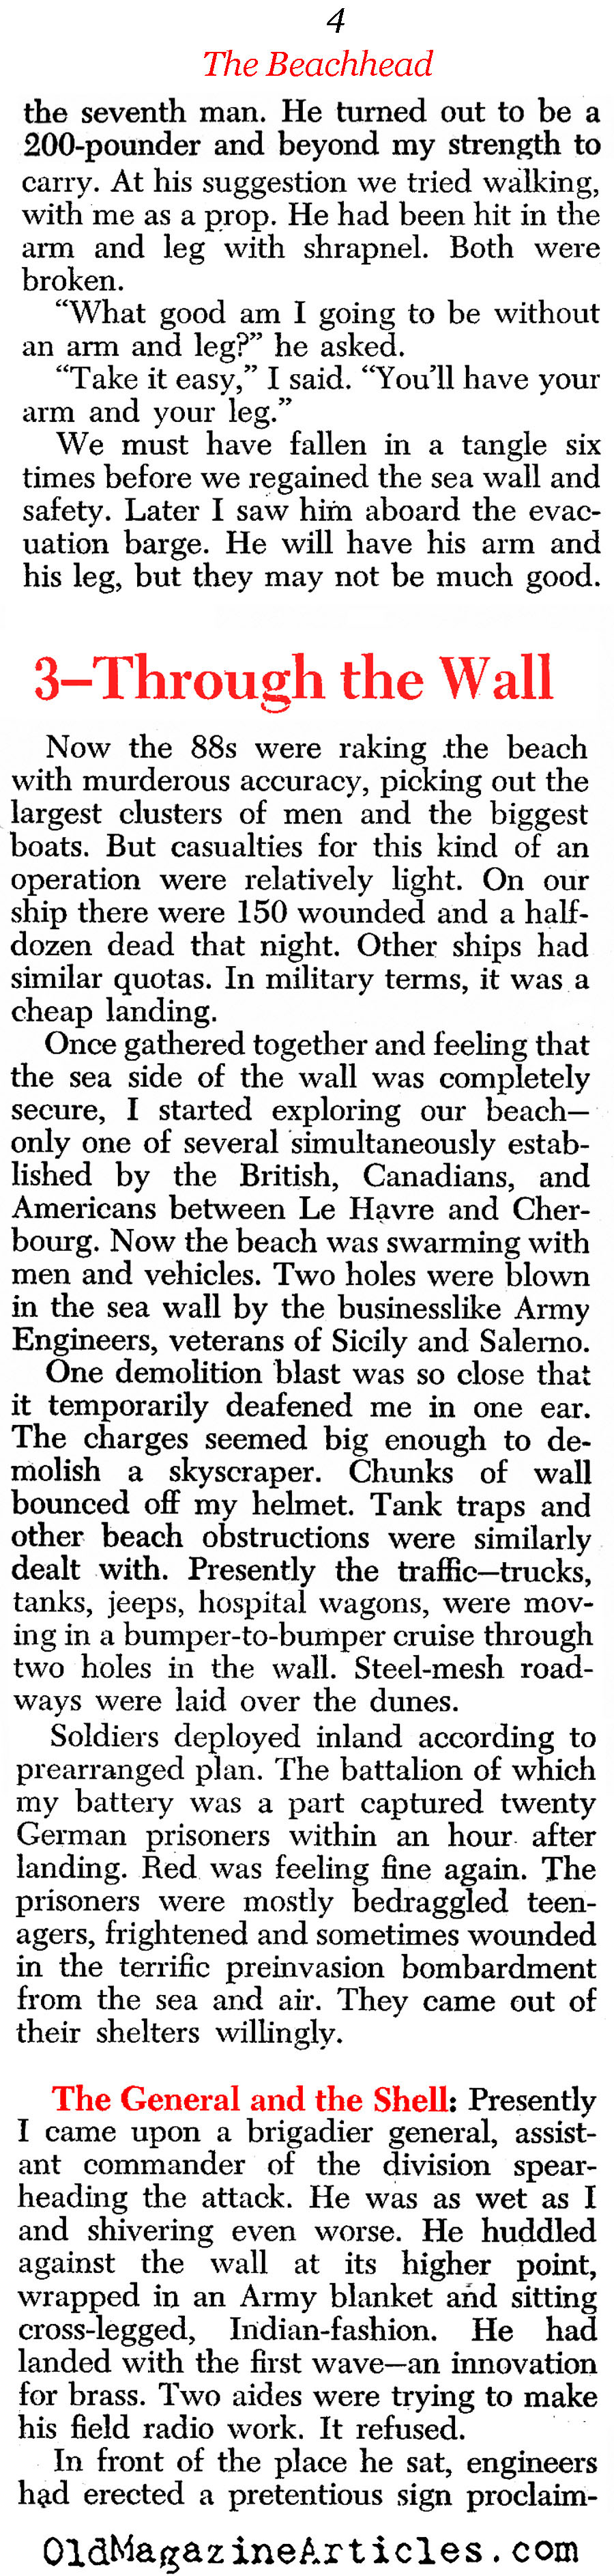 The First Wave (Newsweek Magazine, 1944)